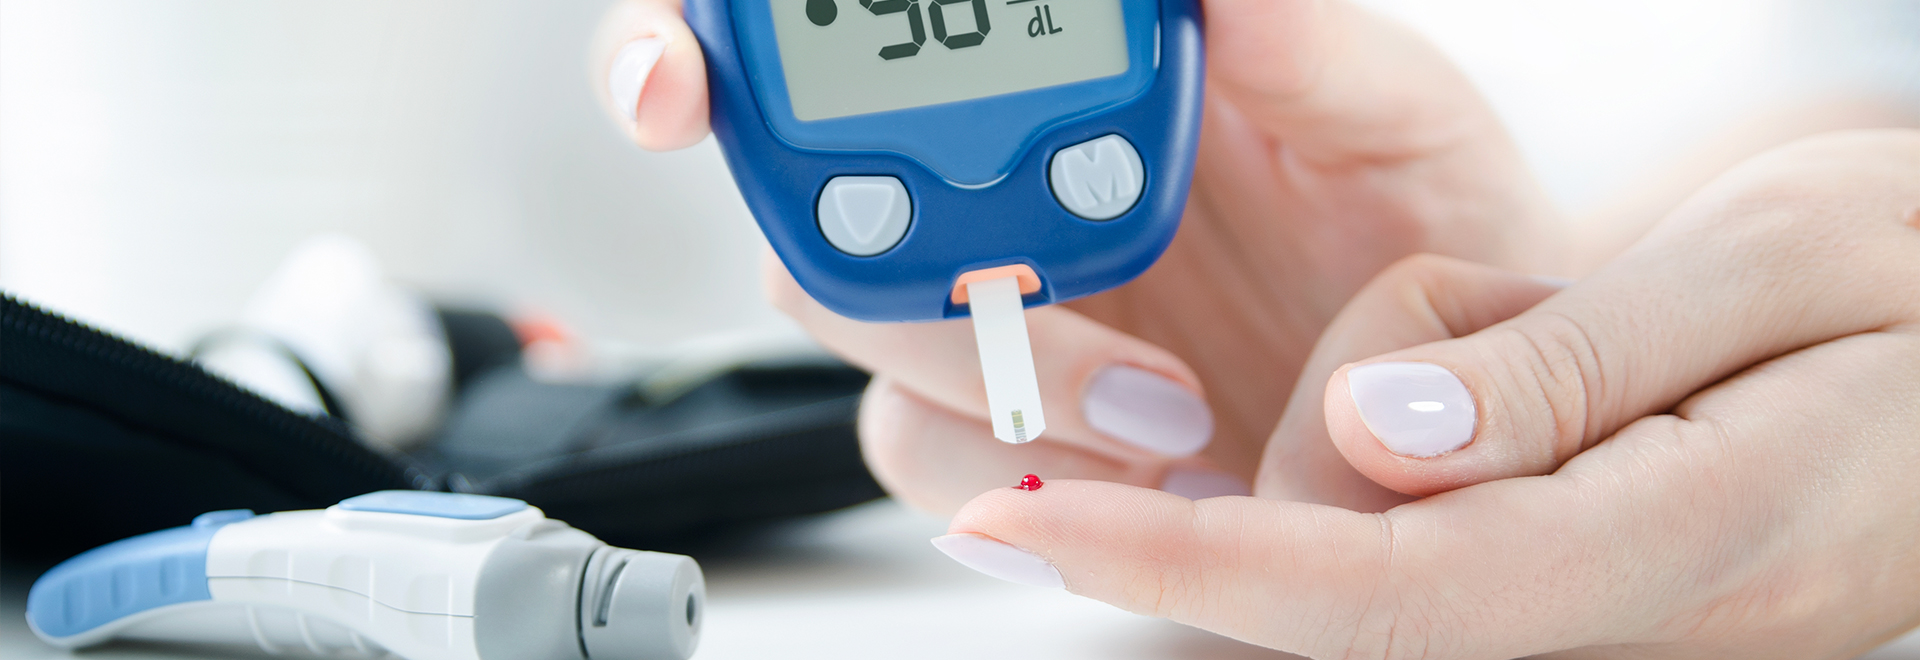 blood-glucose-indicators-glycosylated-heme-for-diabetes-patients